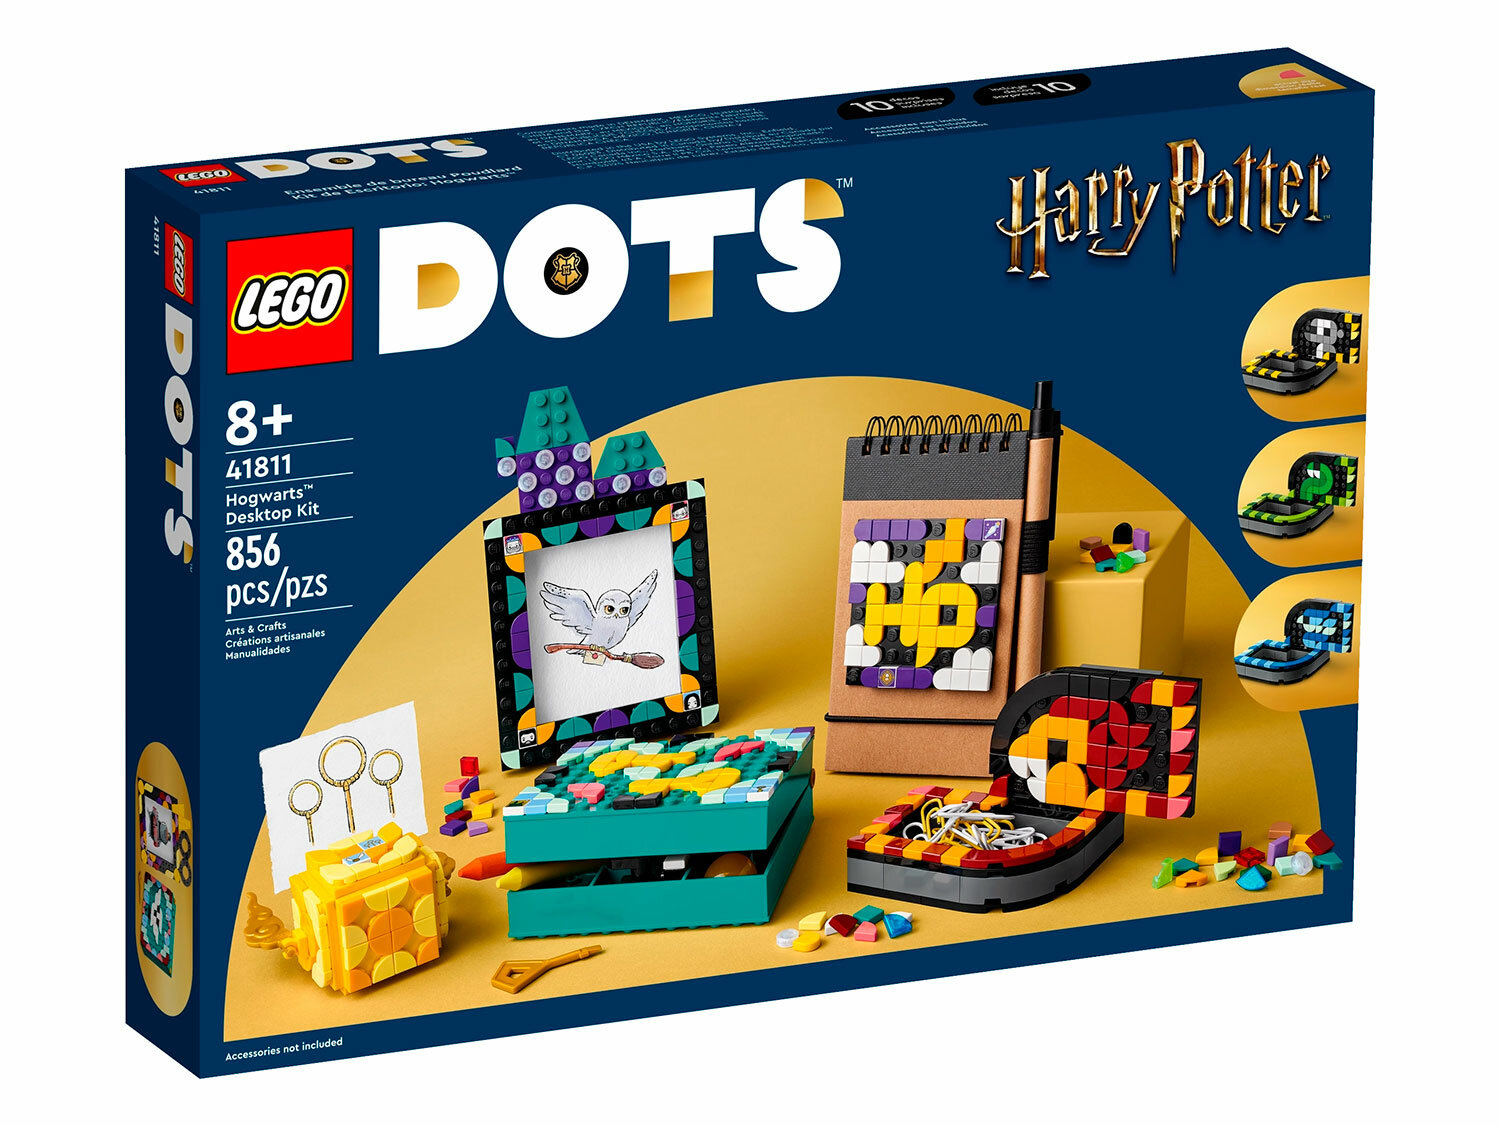 LEGO DOTS 41811 Hogwarts Desktop Kit, 856 дет.